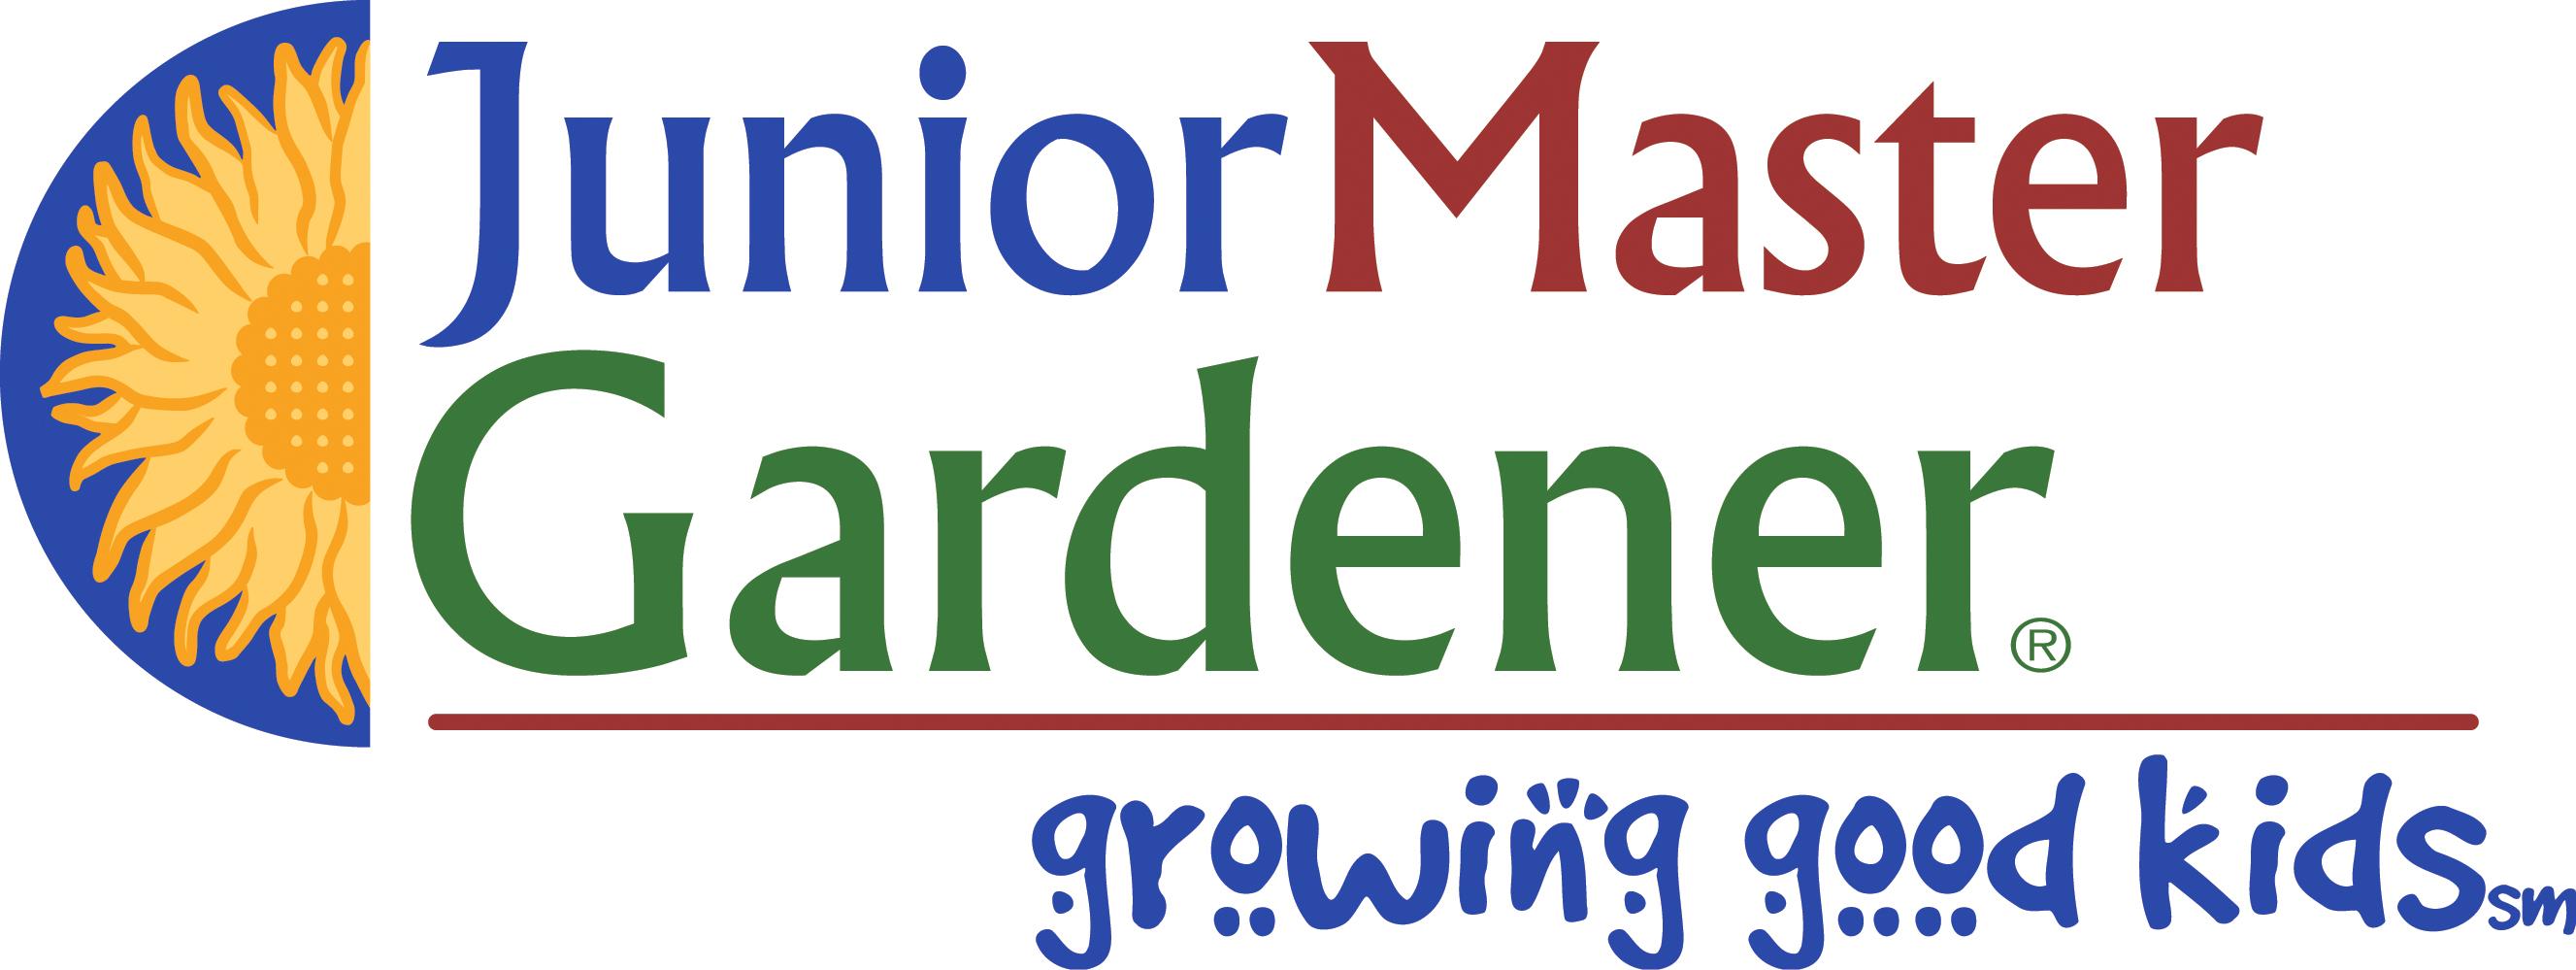 Gardener Logo - Download JMG Art – Junior Master Gardener